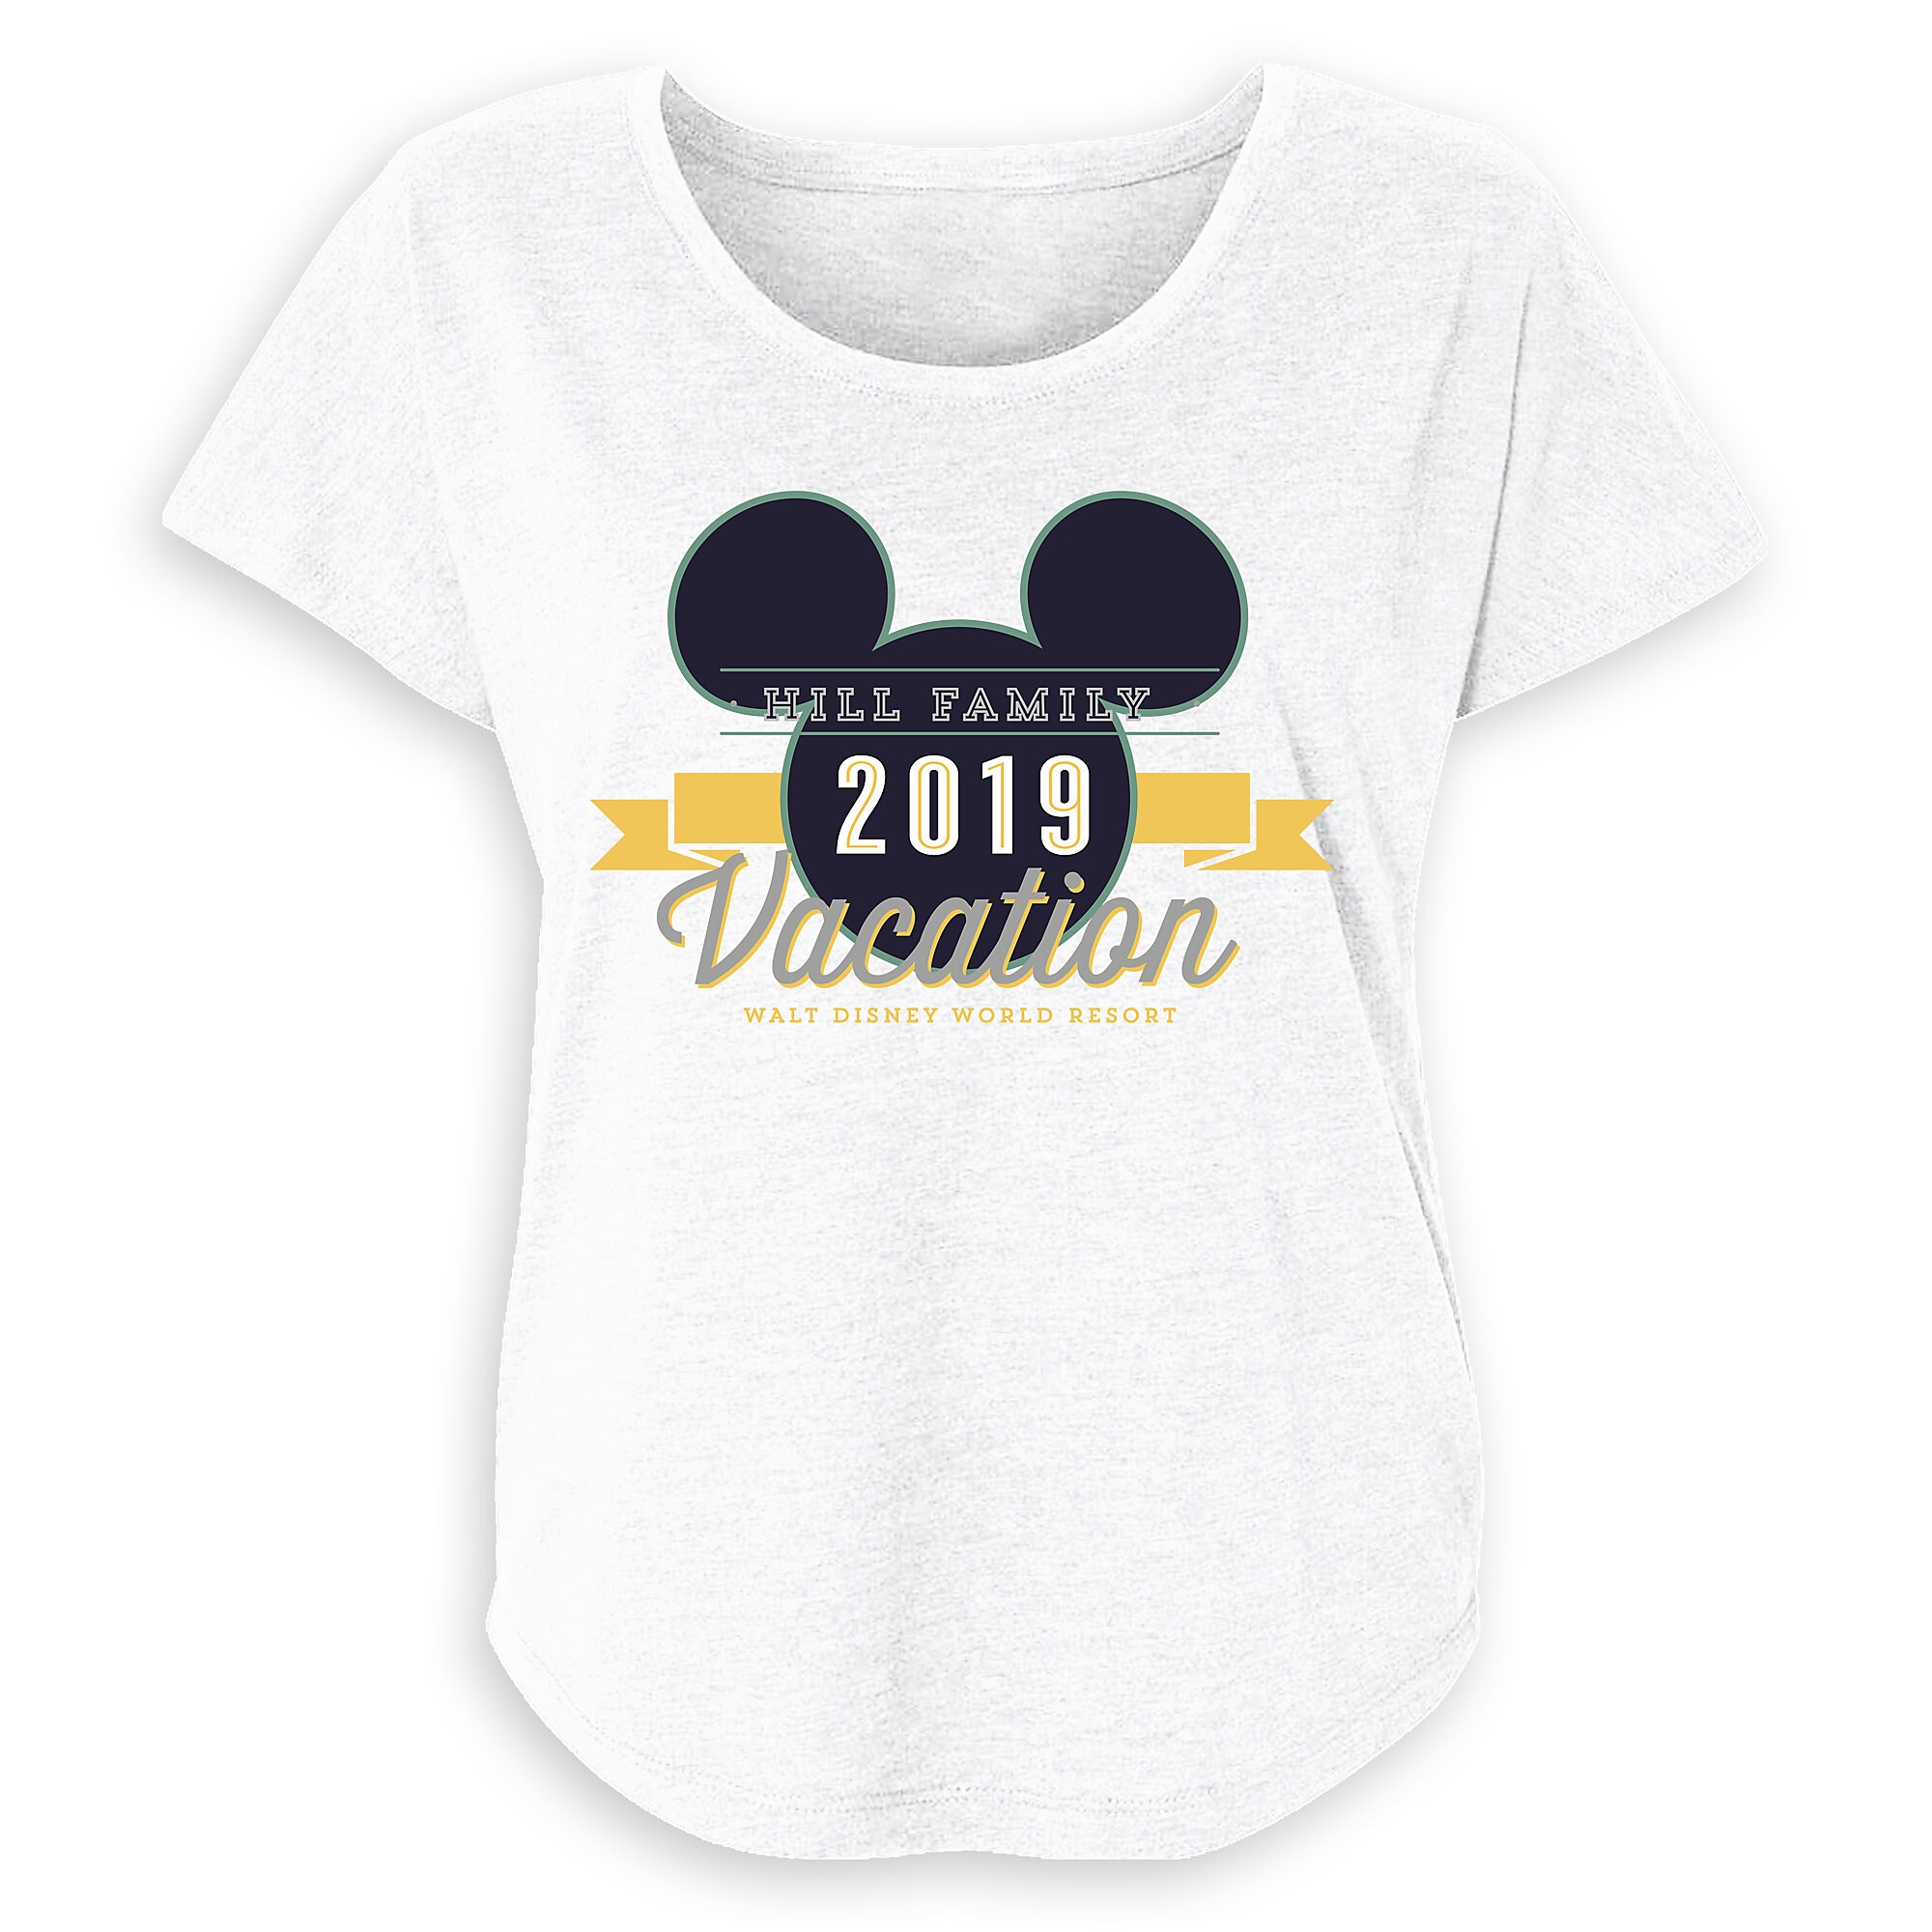 Women's Mickey Mouse Family Vacation T-Shirt - Walt Disney World Resort - 2019 - Customized